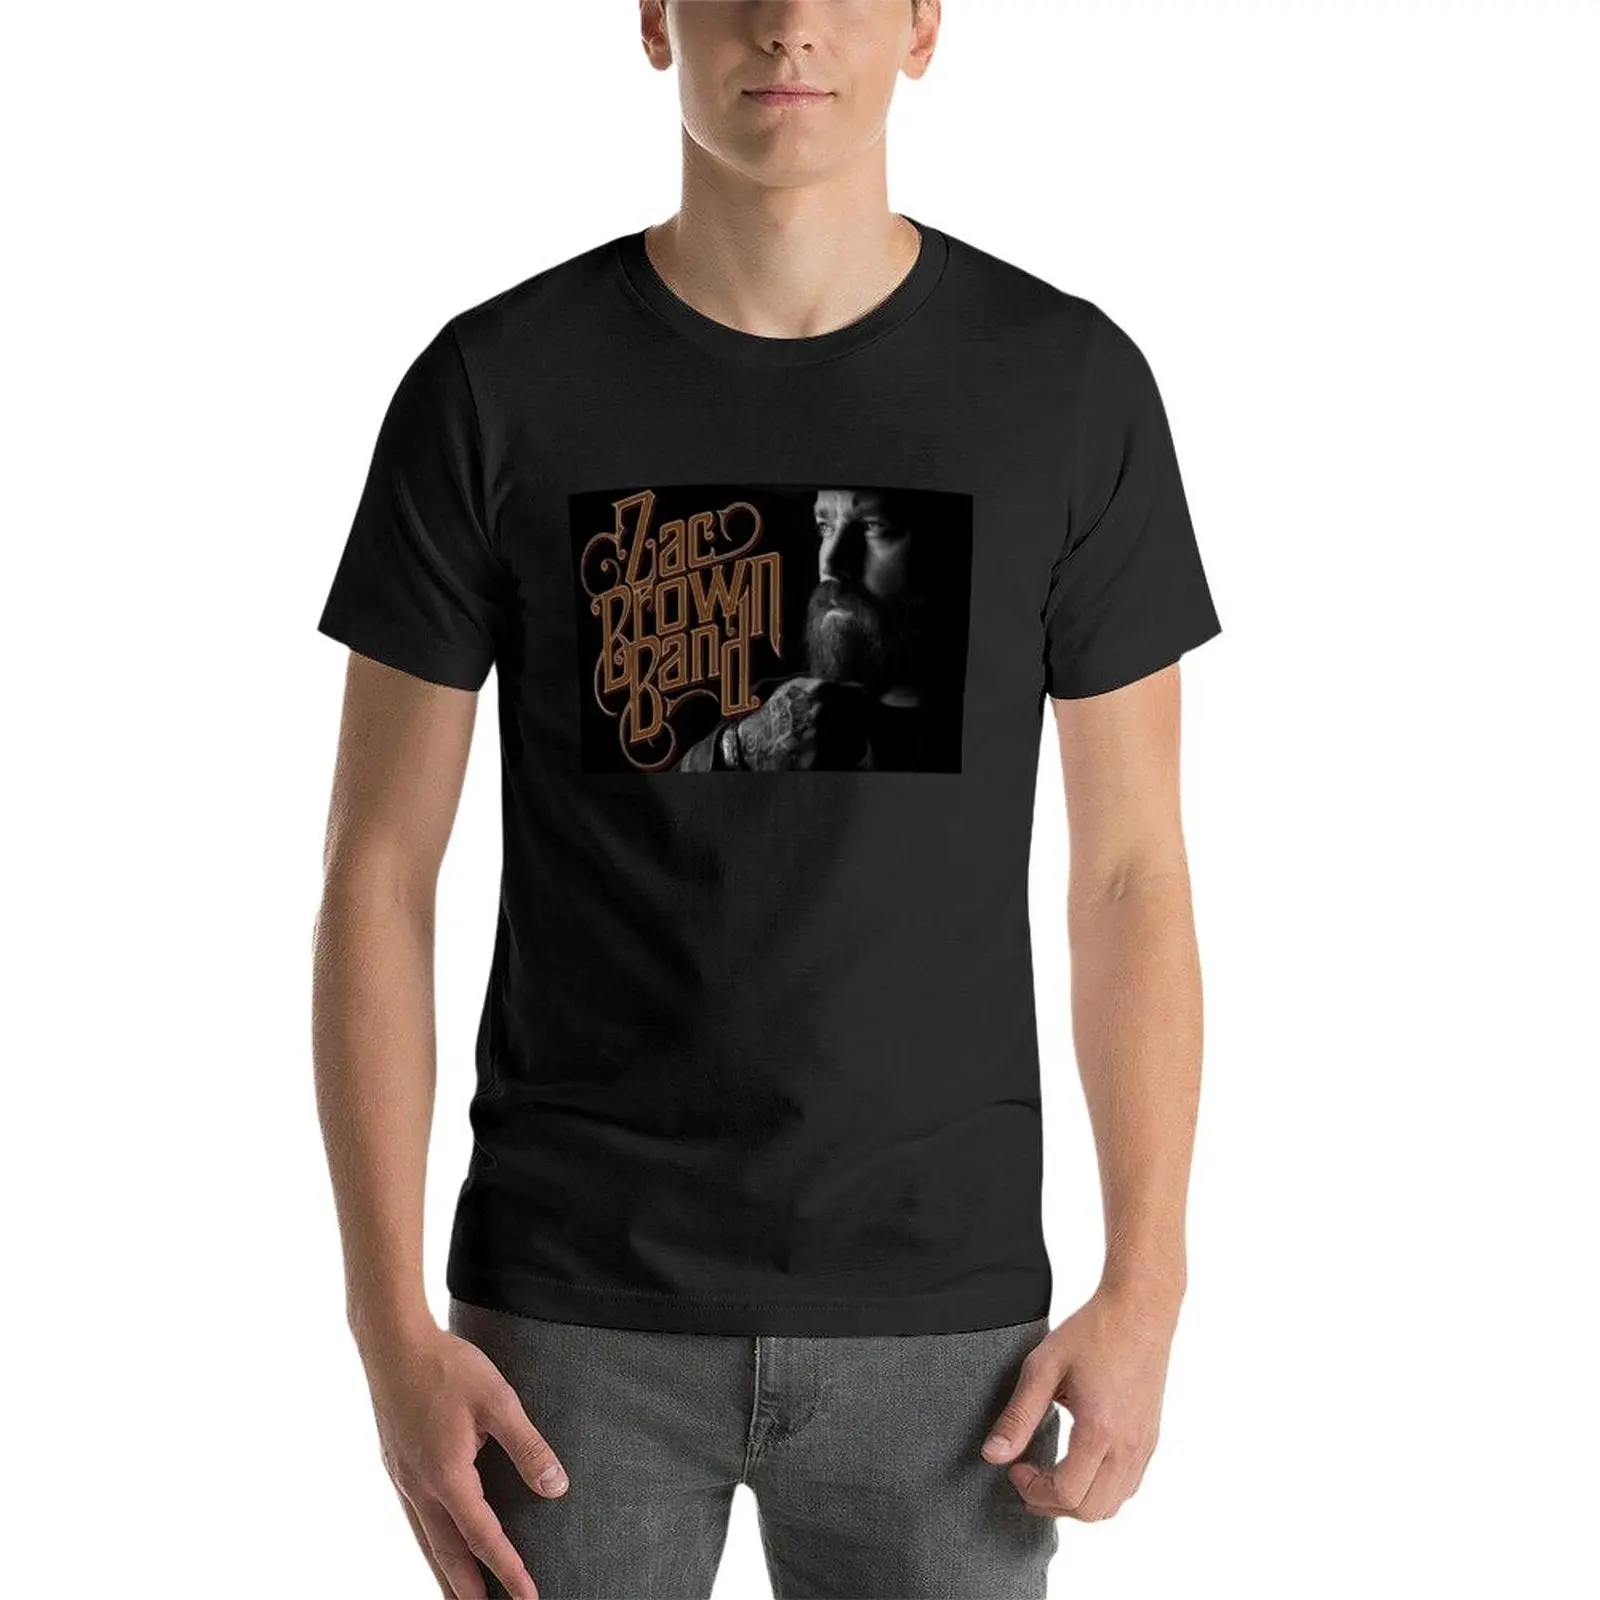 Novo zac orcamentos utilizando a tecnica de jack brown banda 2019 nirmala T-Shirt estética roupas simples t-shirt personalizada t-shirt dos Homens t-shirts